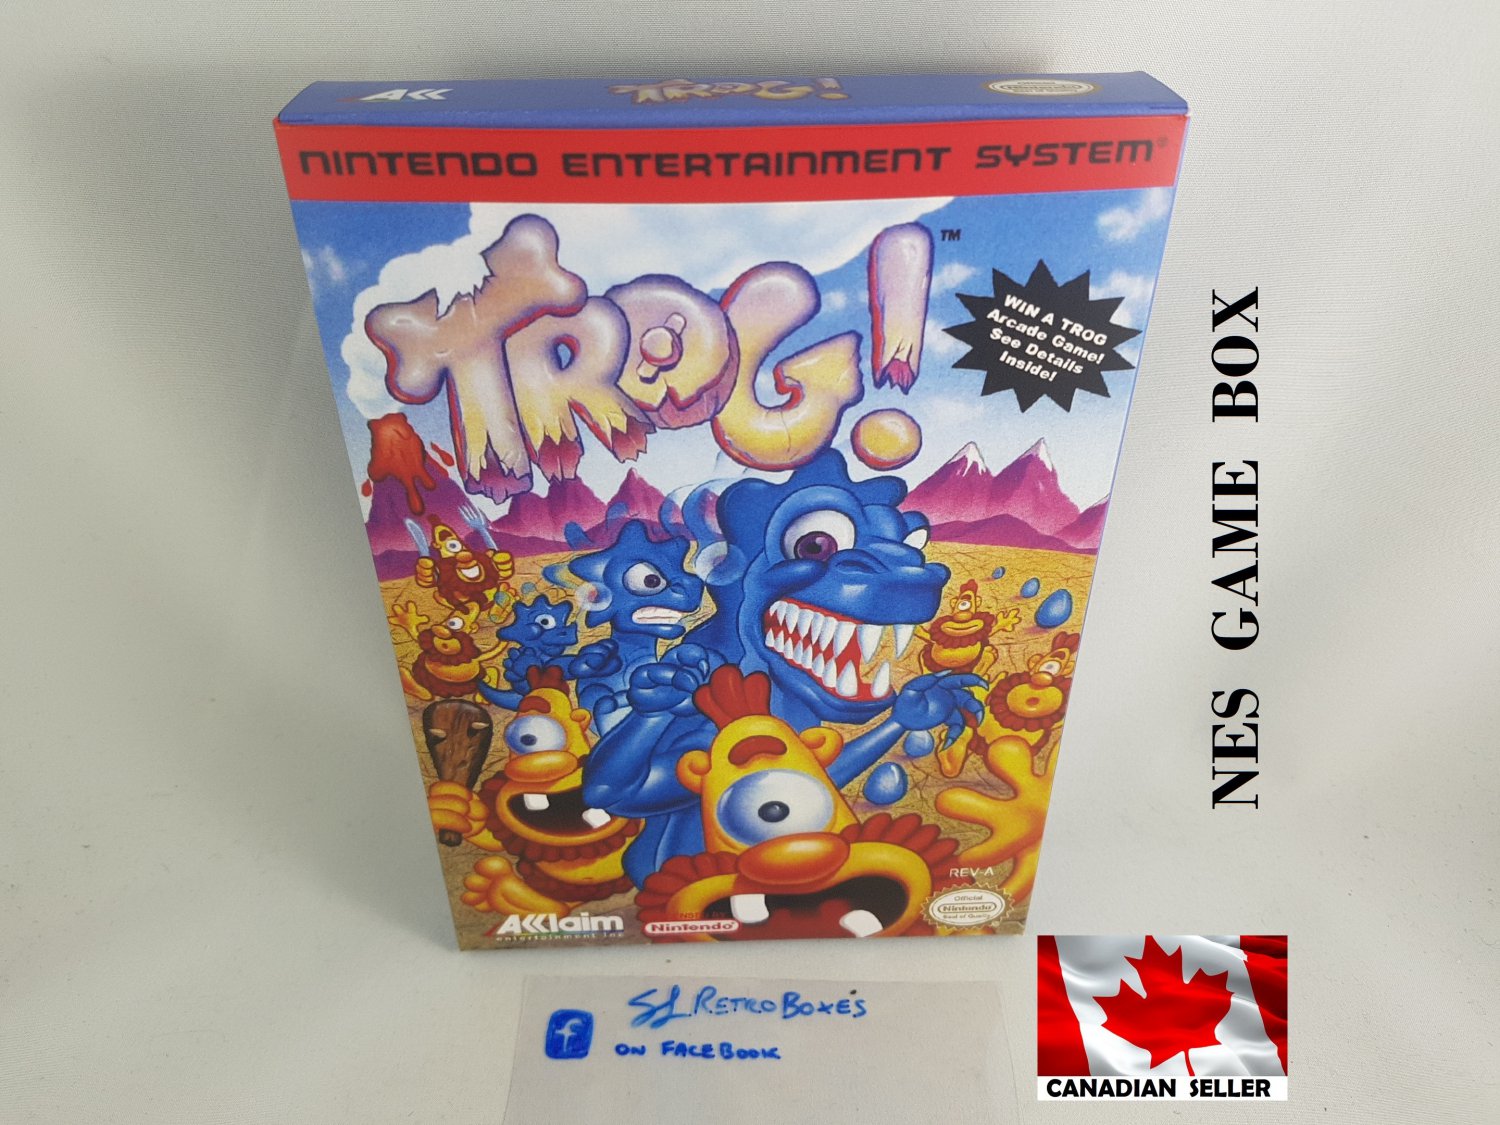 TROG! - NES, Nintendo Custom replacement BOX optional w/ Dust Cover & PVC Protector